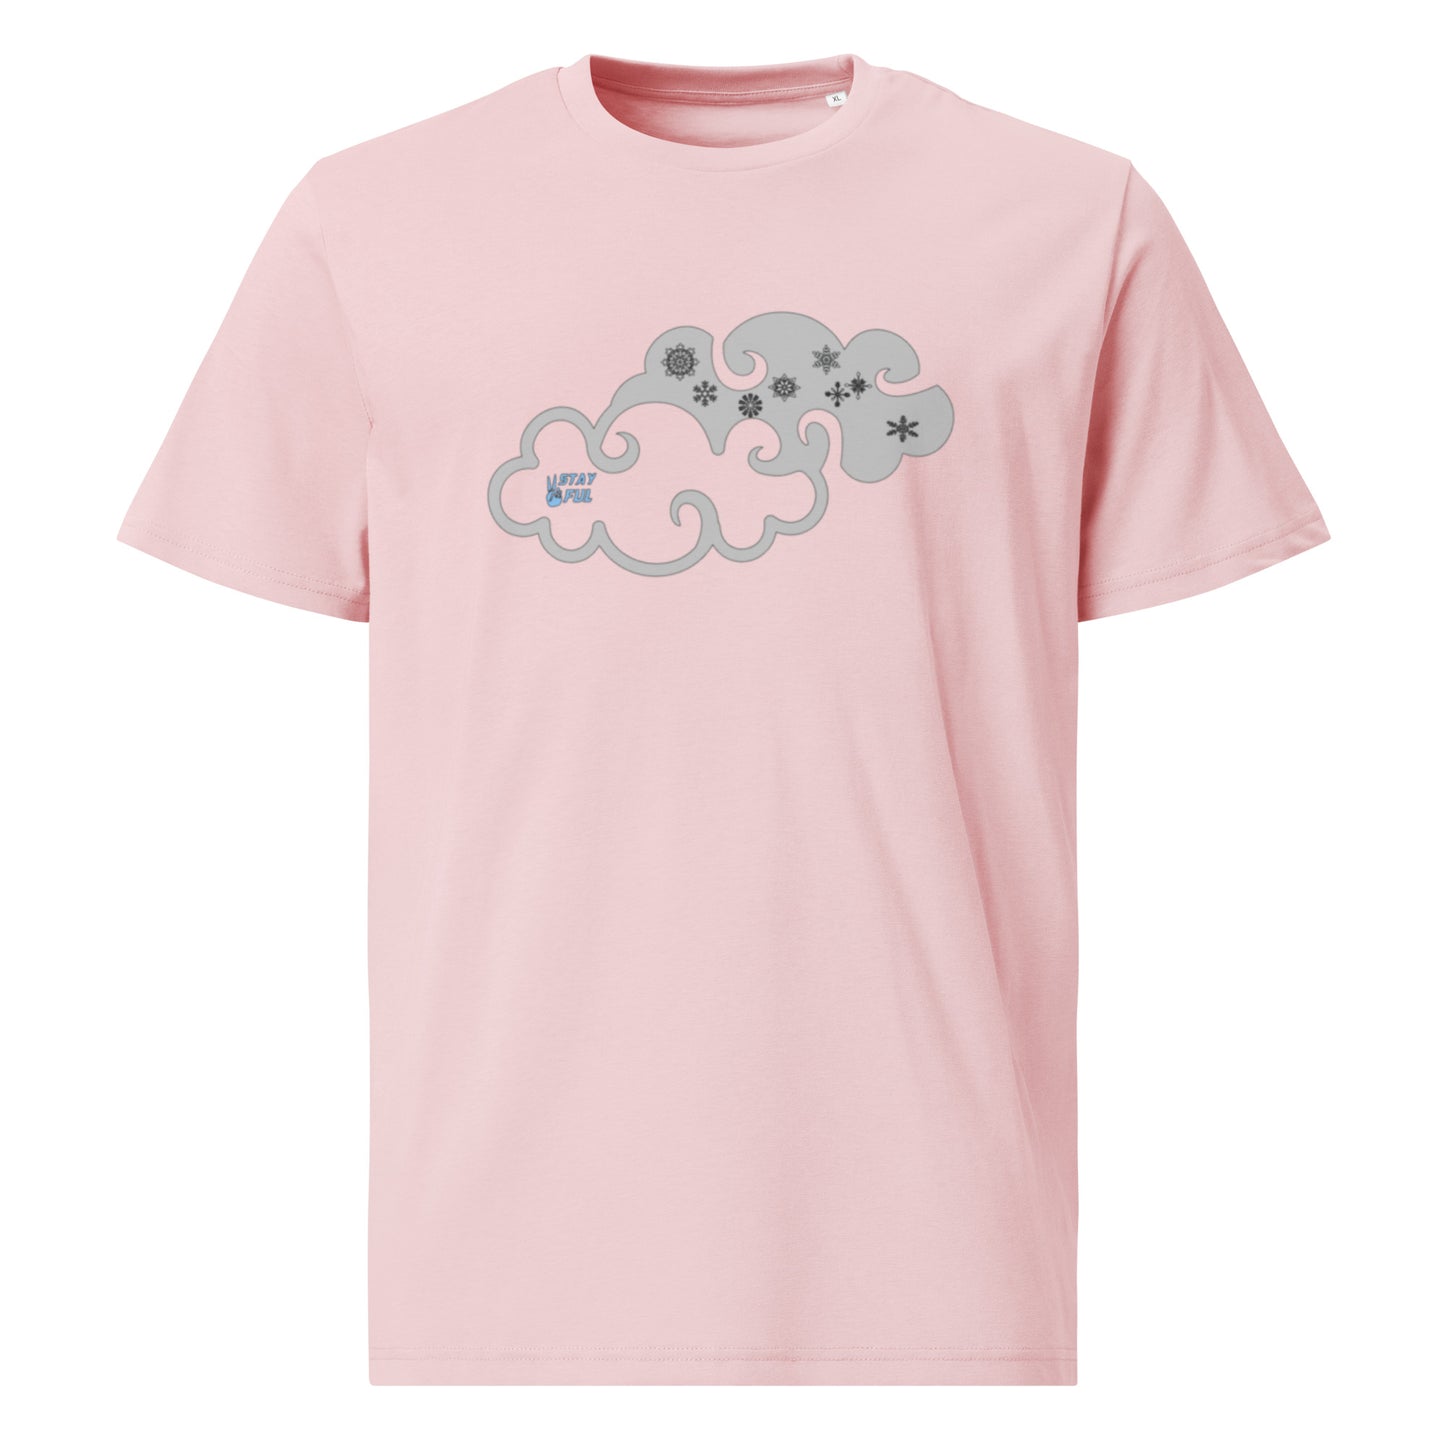 Unisex Peaceful Minimalistic Cloud organic cotton t-shirt